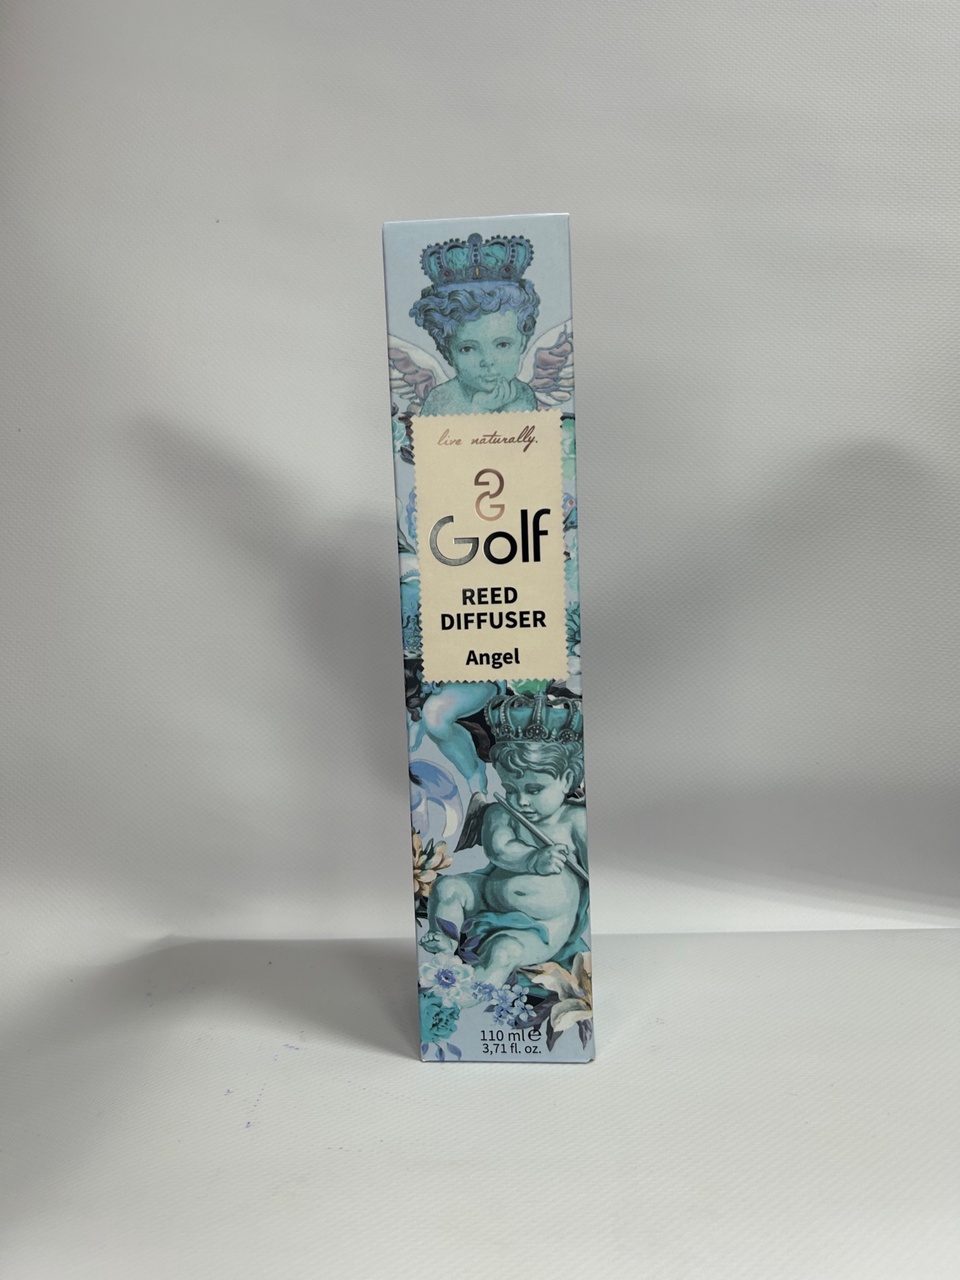 Ароматический диффузор Golf “Ангел”, 110ml - 550 ₽, заказать онлайн.